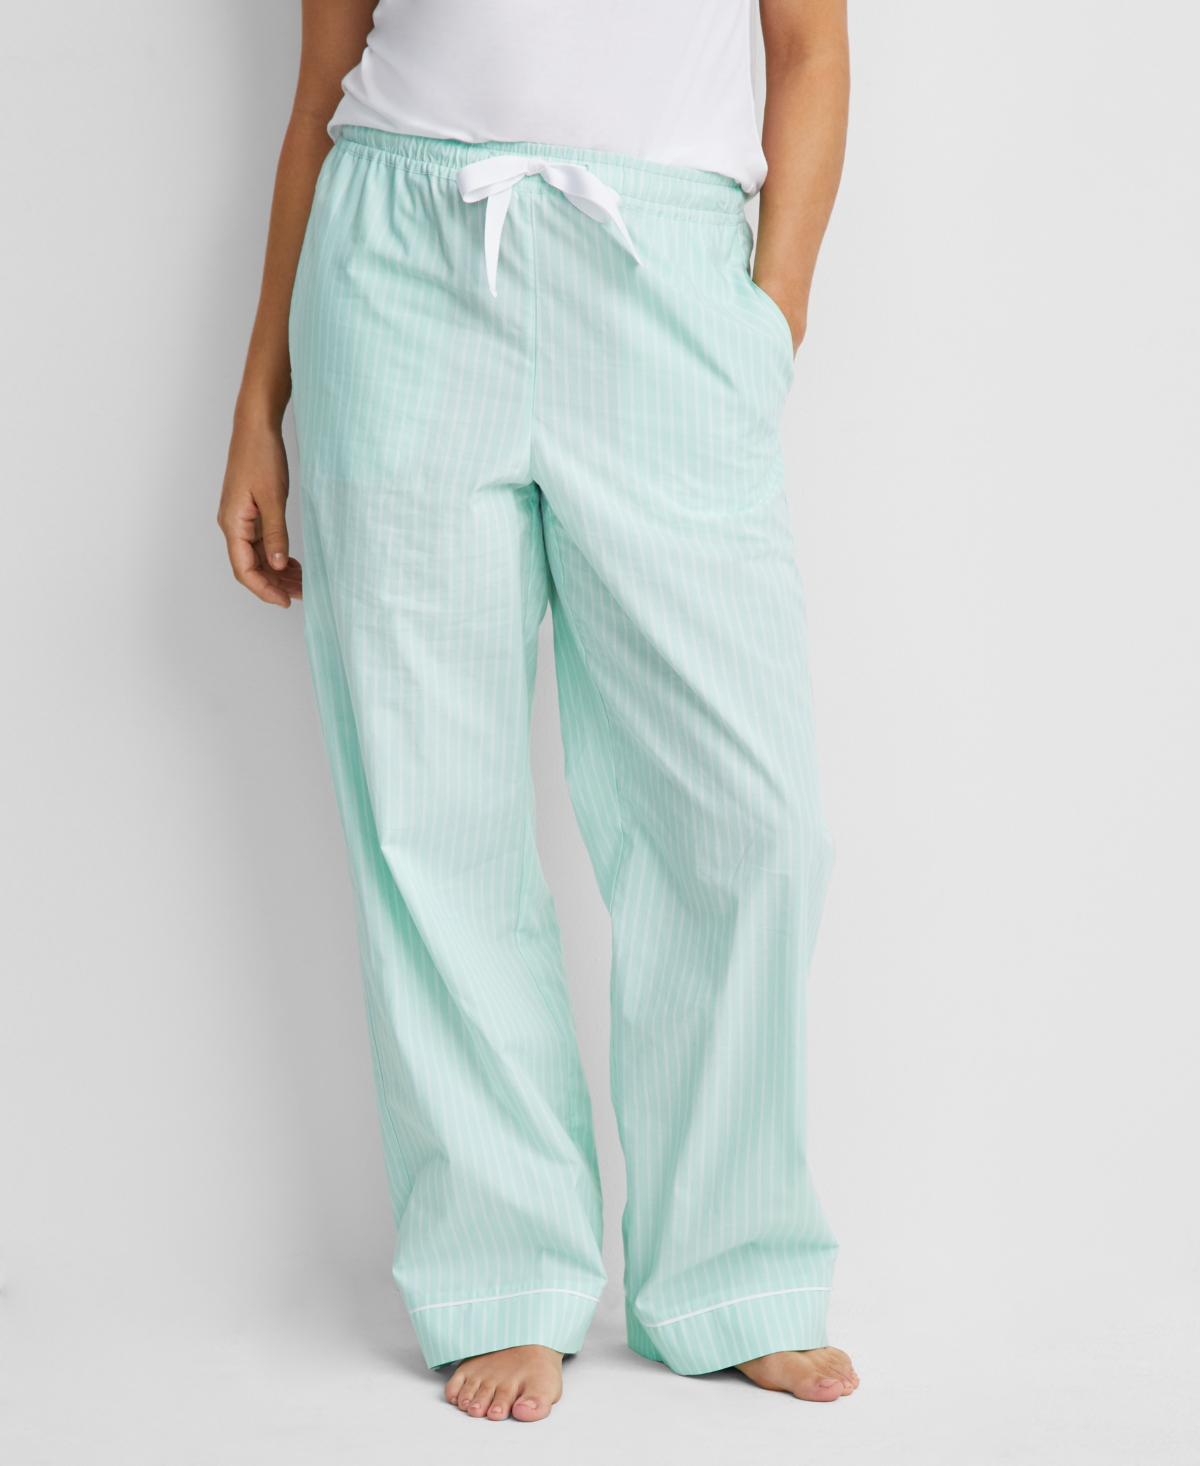 Women's Printed Poplin Pajama Pants Xs-3X, Created for Macy's - Mauve Orchid